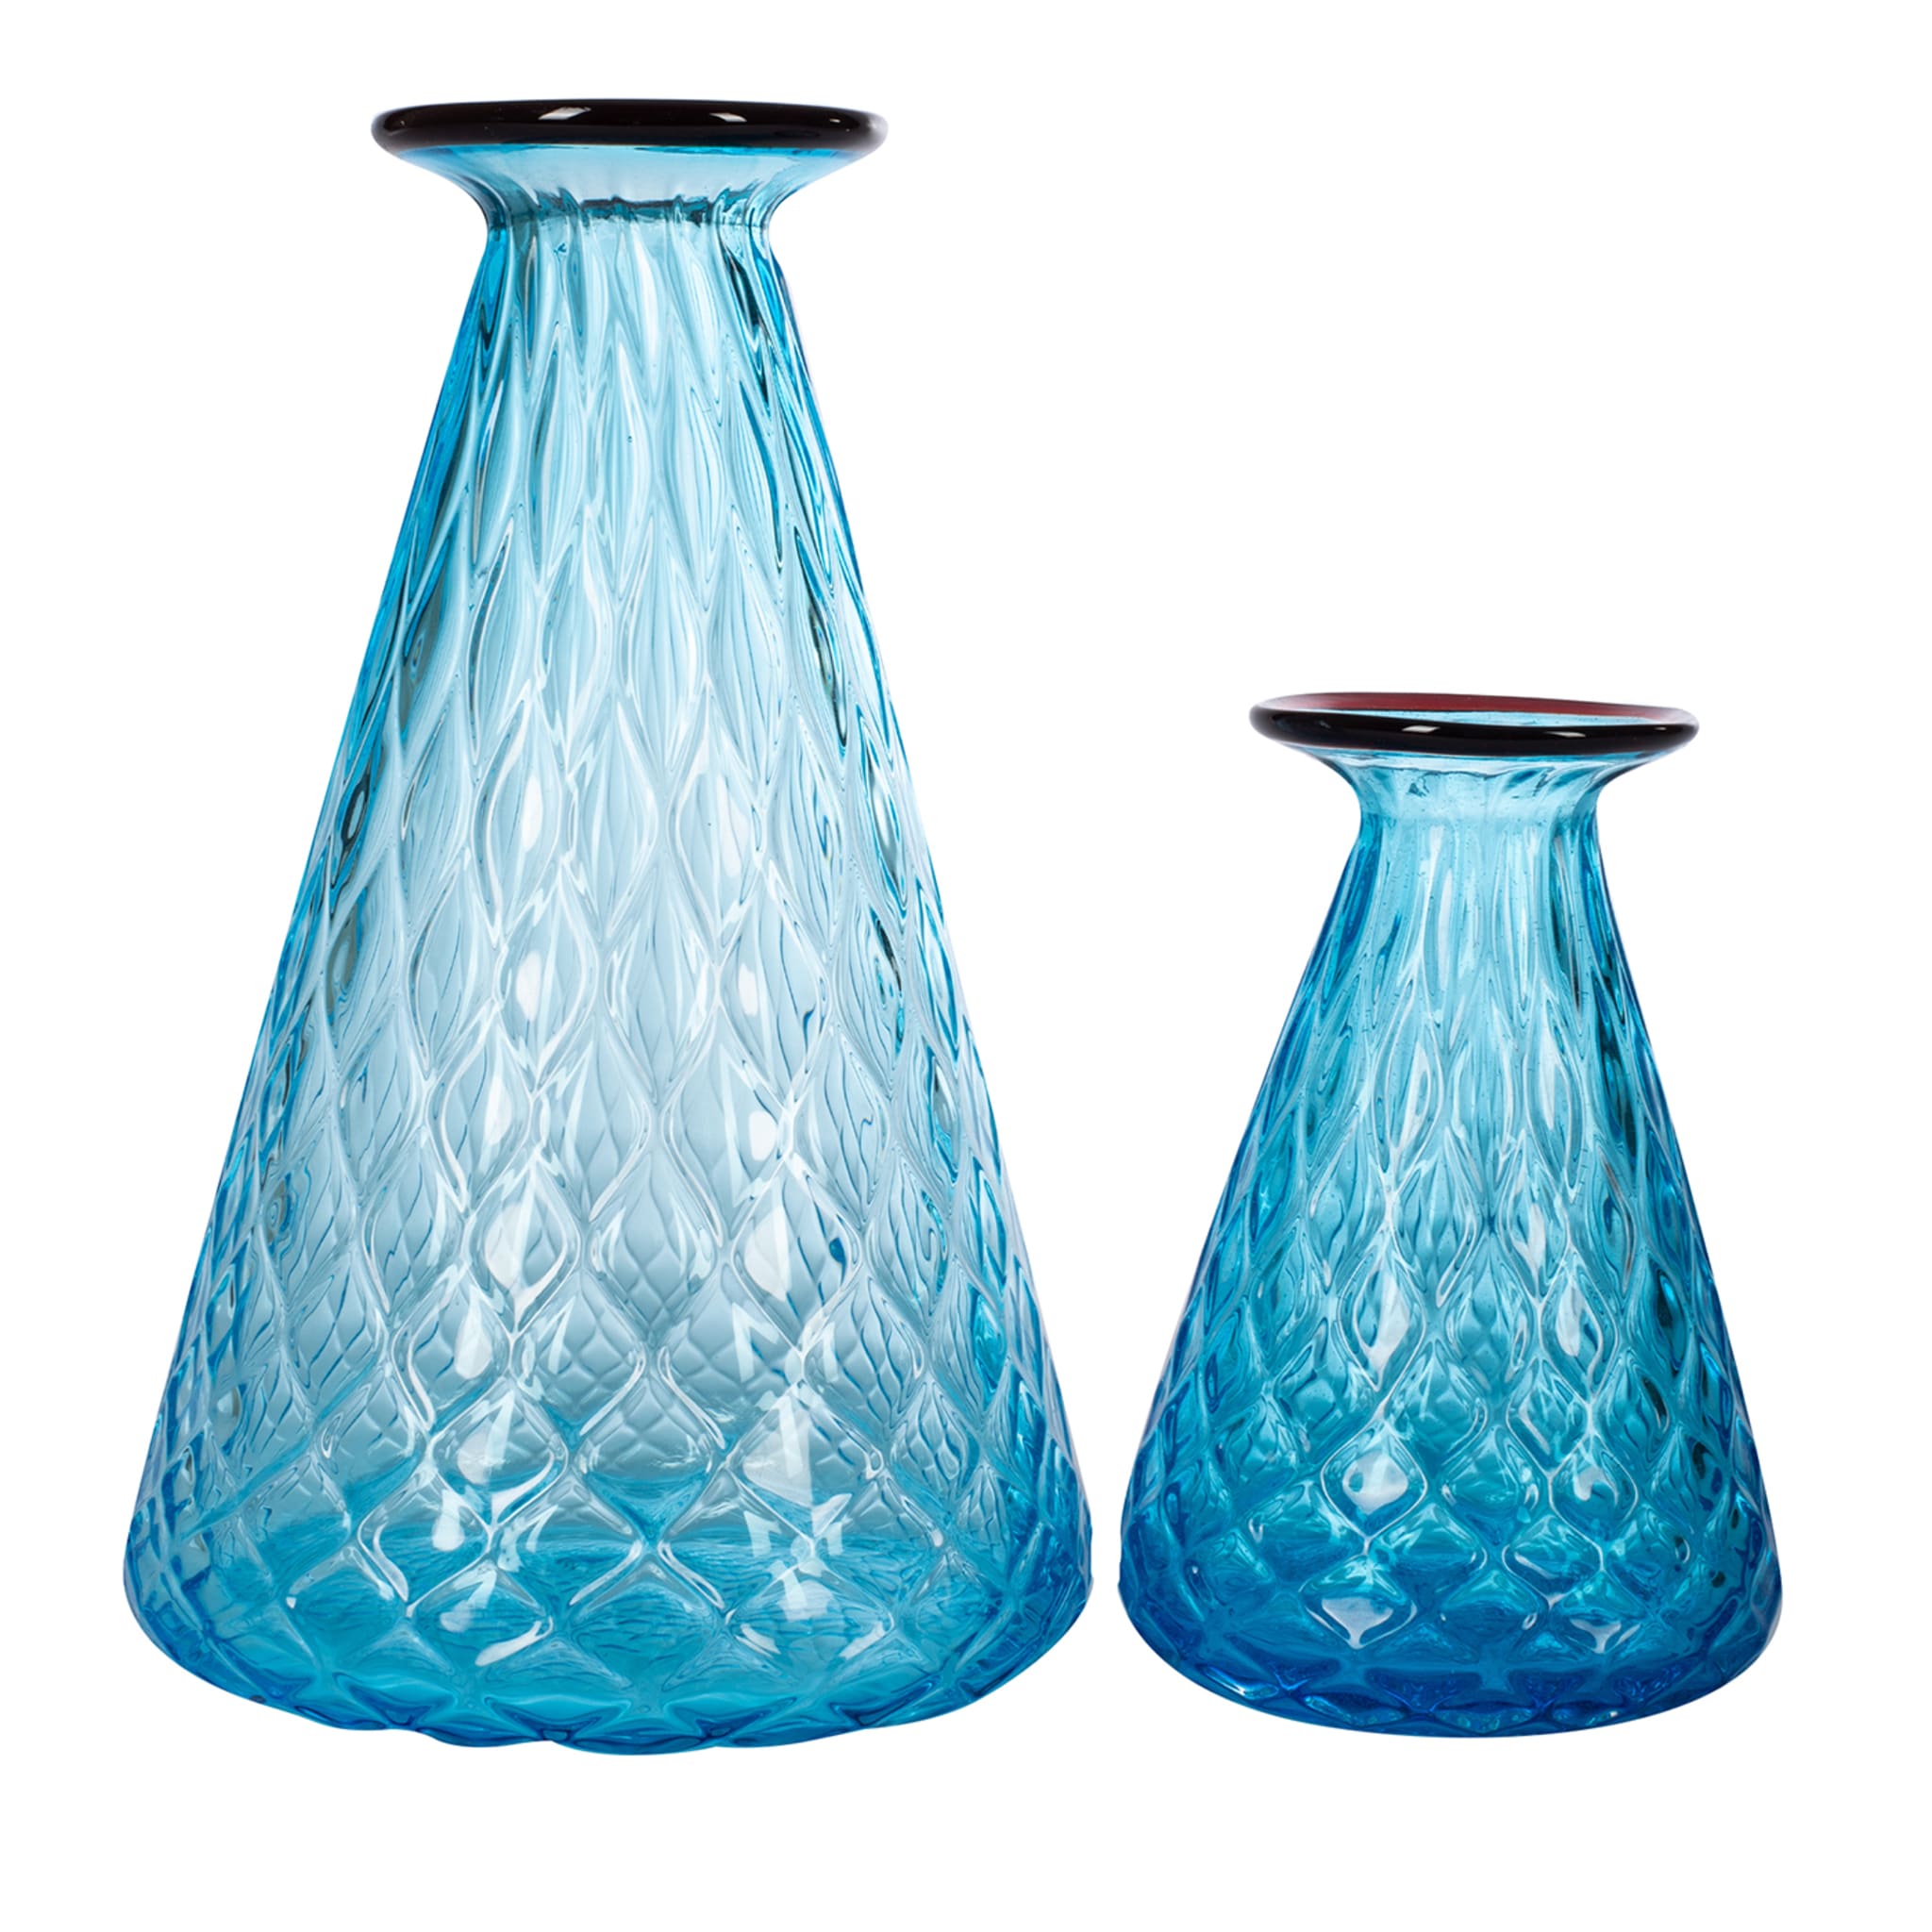 Acqua Mare Balloton Set of 2 Conical Azure Vases - Main view